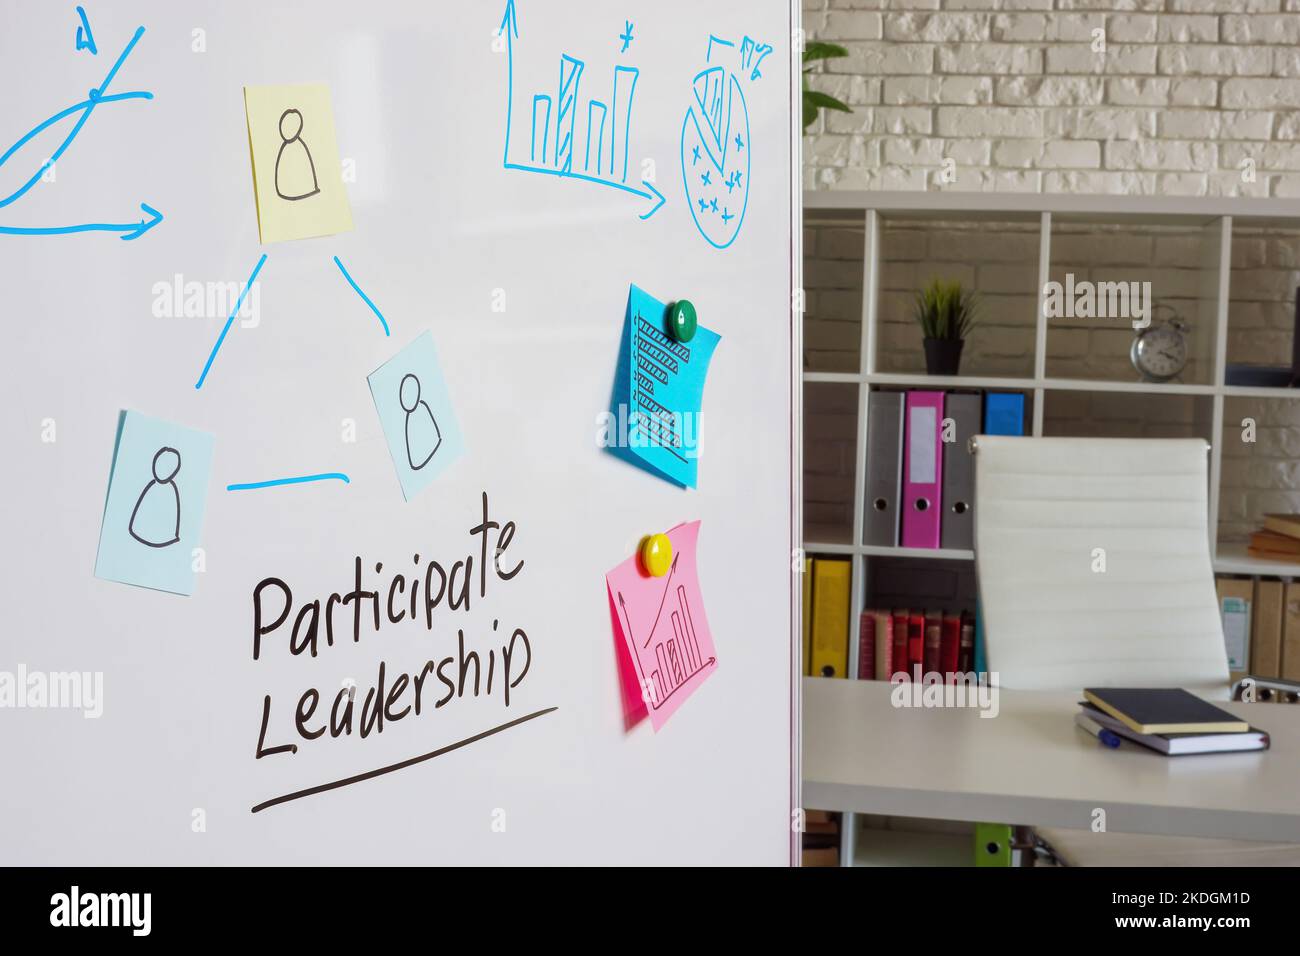 Participate leadership plan written on the whiteboard. Stock Photo